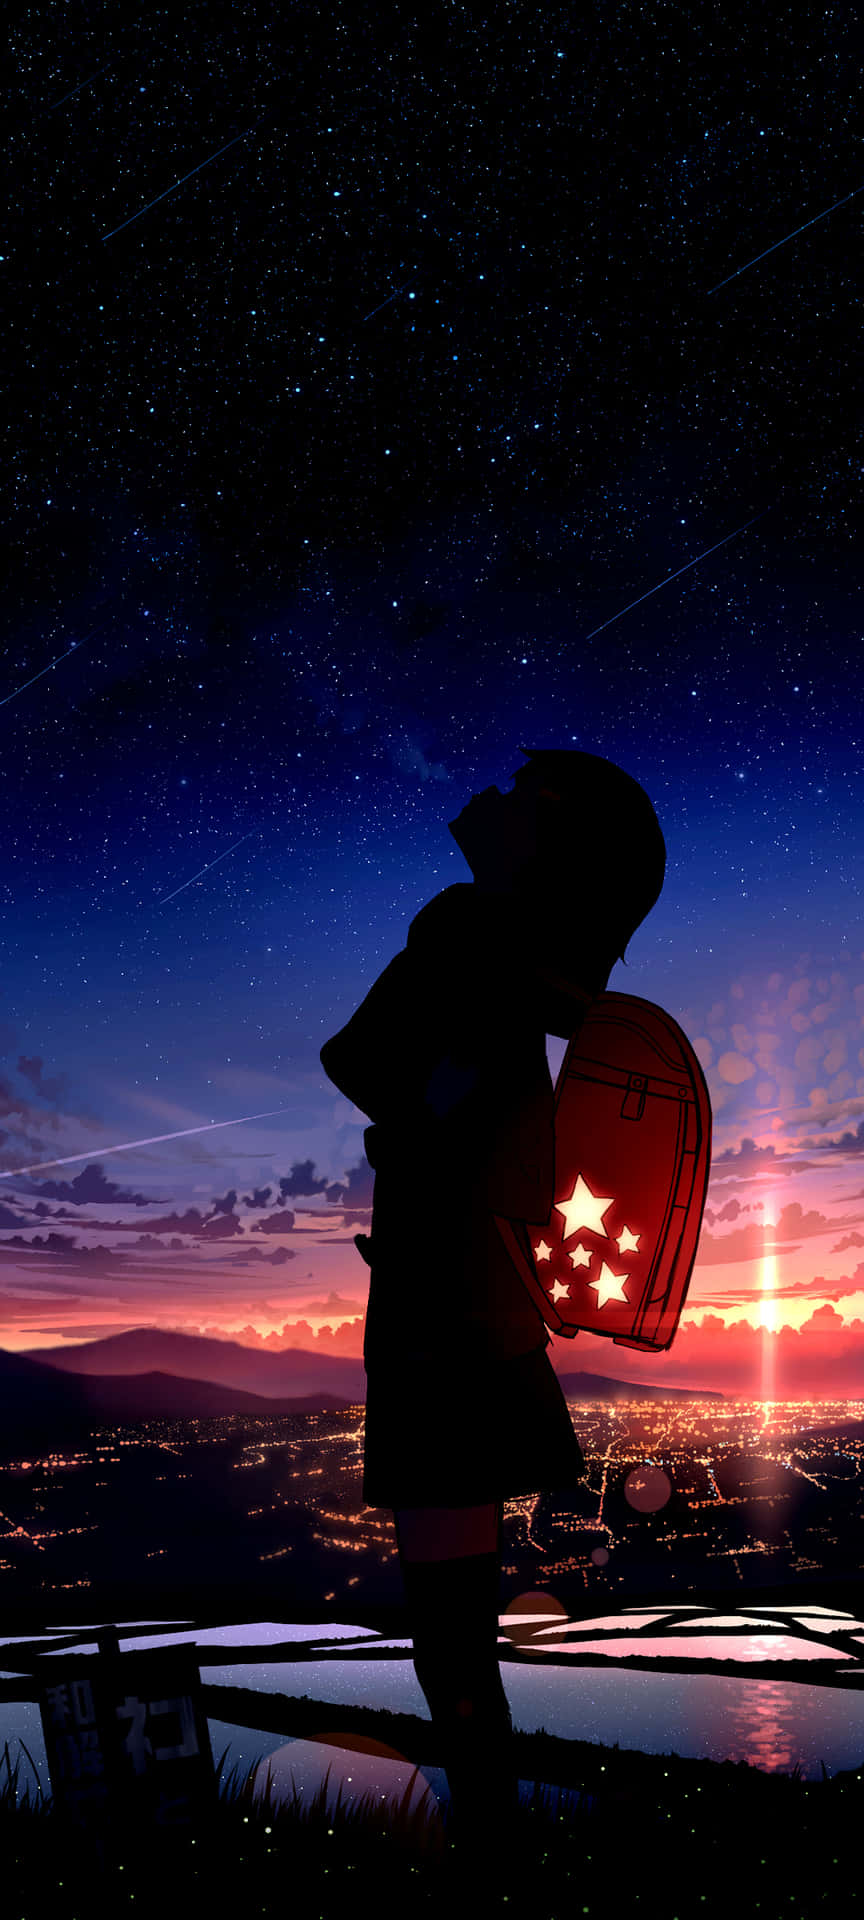 Anime Sky's stunningly beautiful backdrop